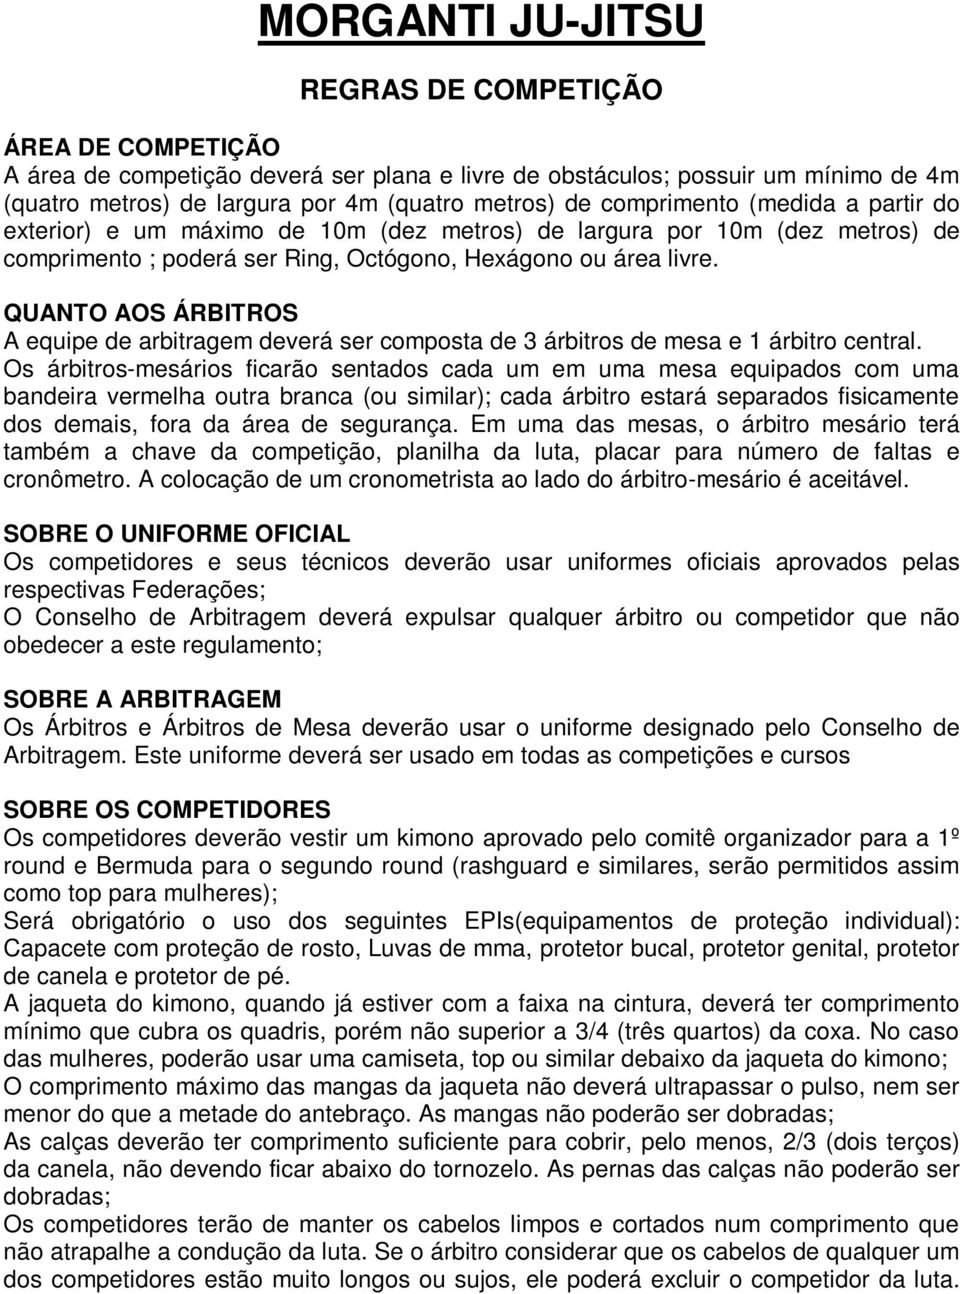 MORGANTI JU-JITSU REGRAS DE COMPETIÇÃO - PDF Free Download